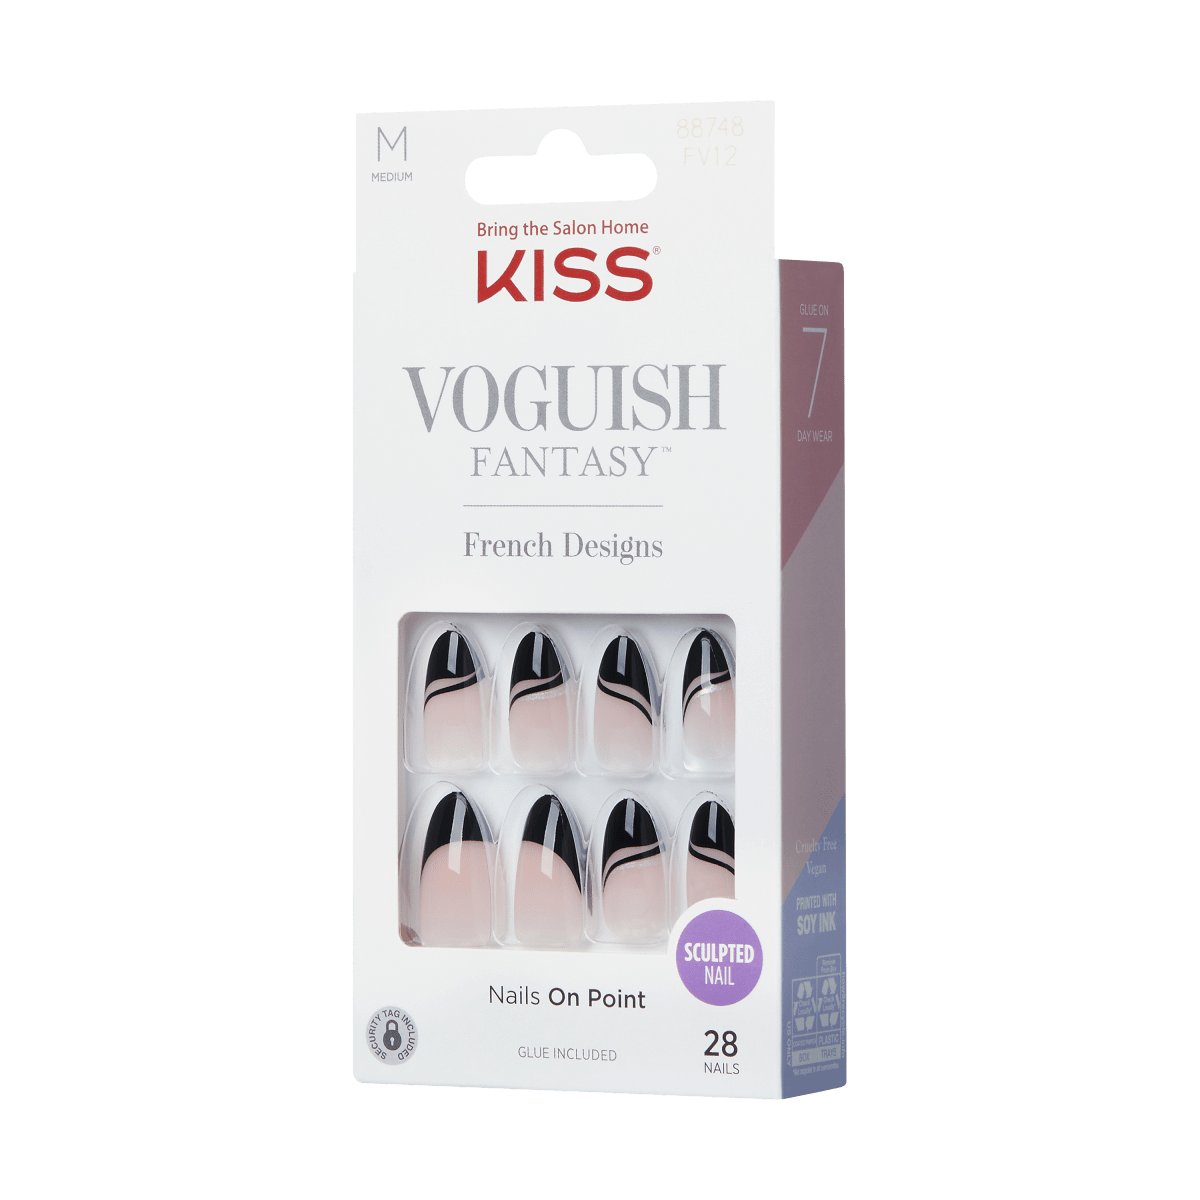 KISS Voguish Fantasy French Press-On Nails, Magnifique, Black, Medium ...